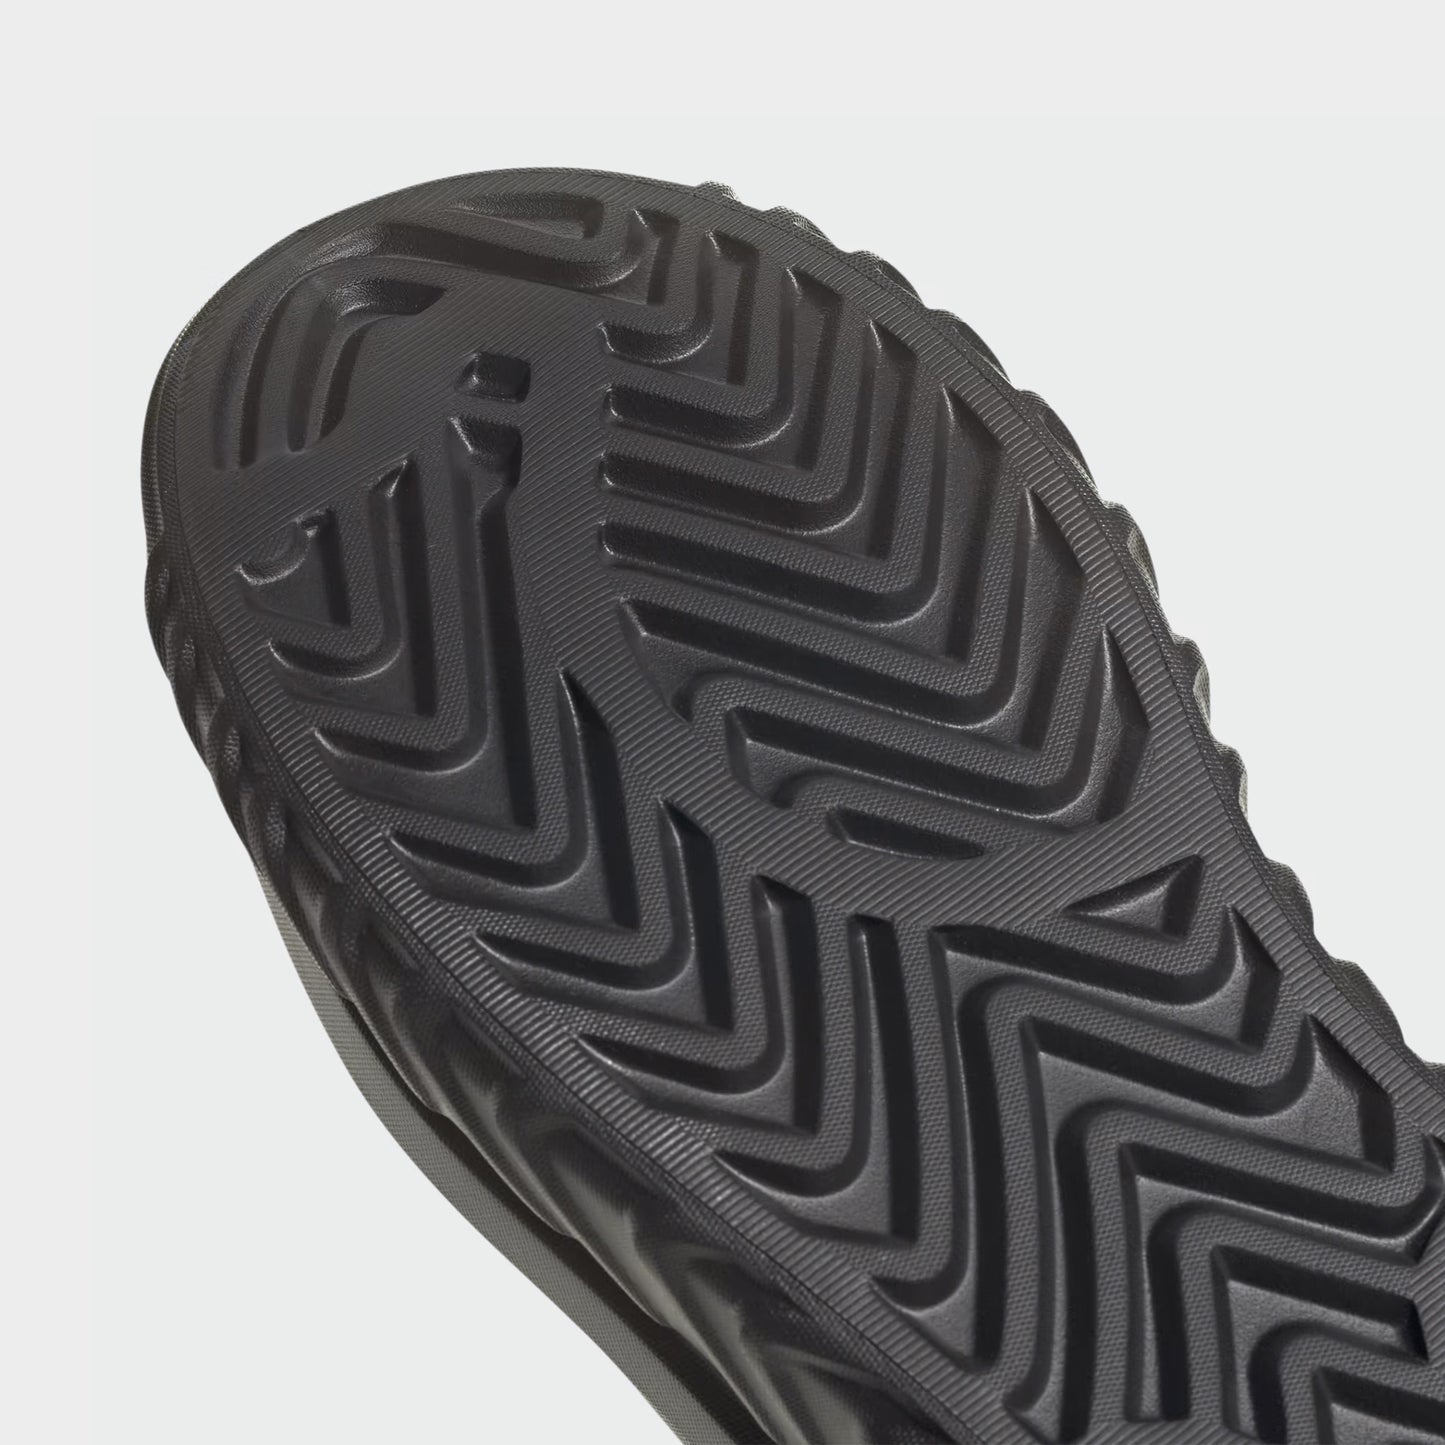 Adidas Adifoam Superstar Boot in black